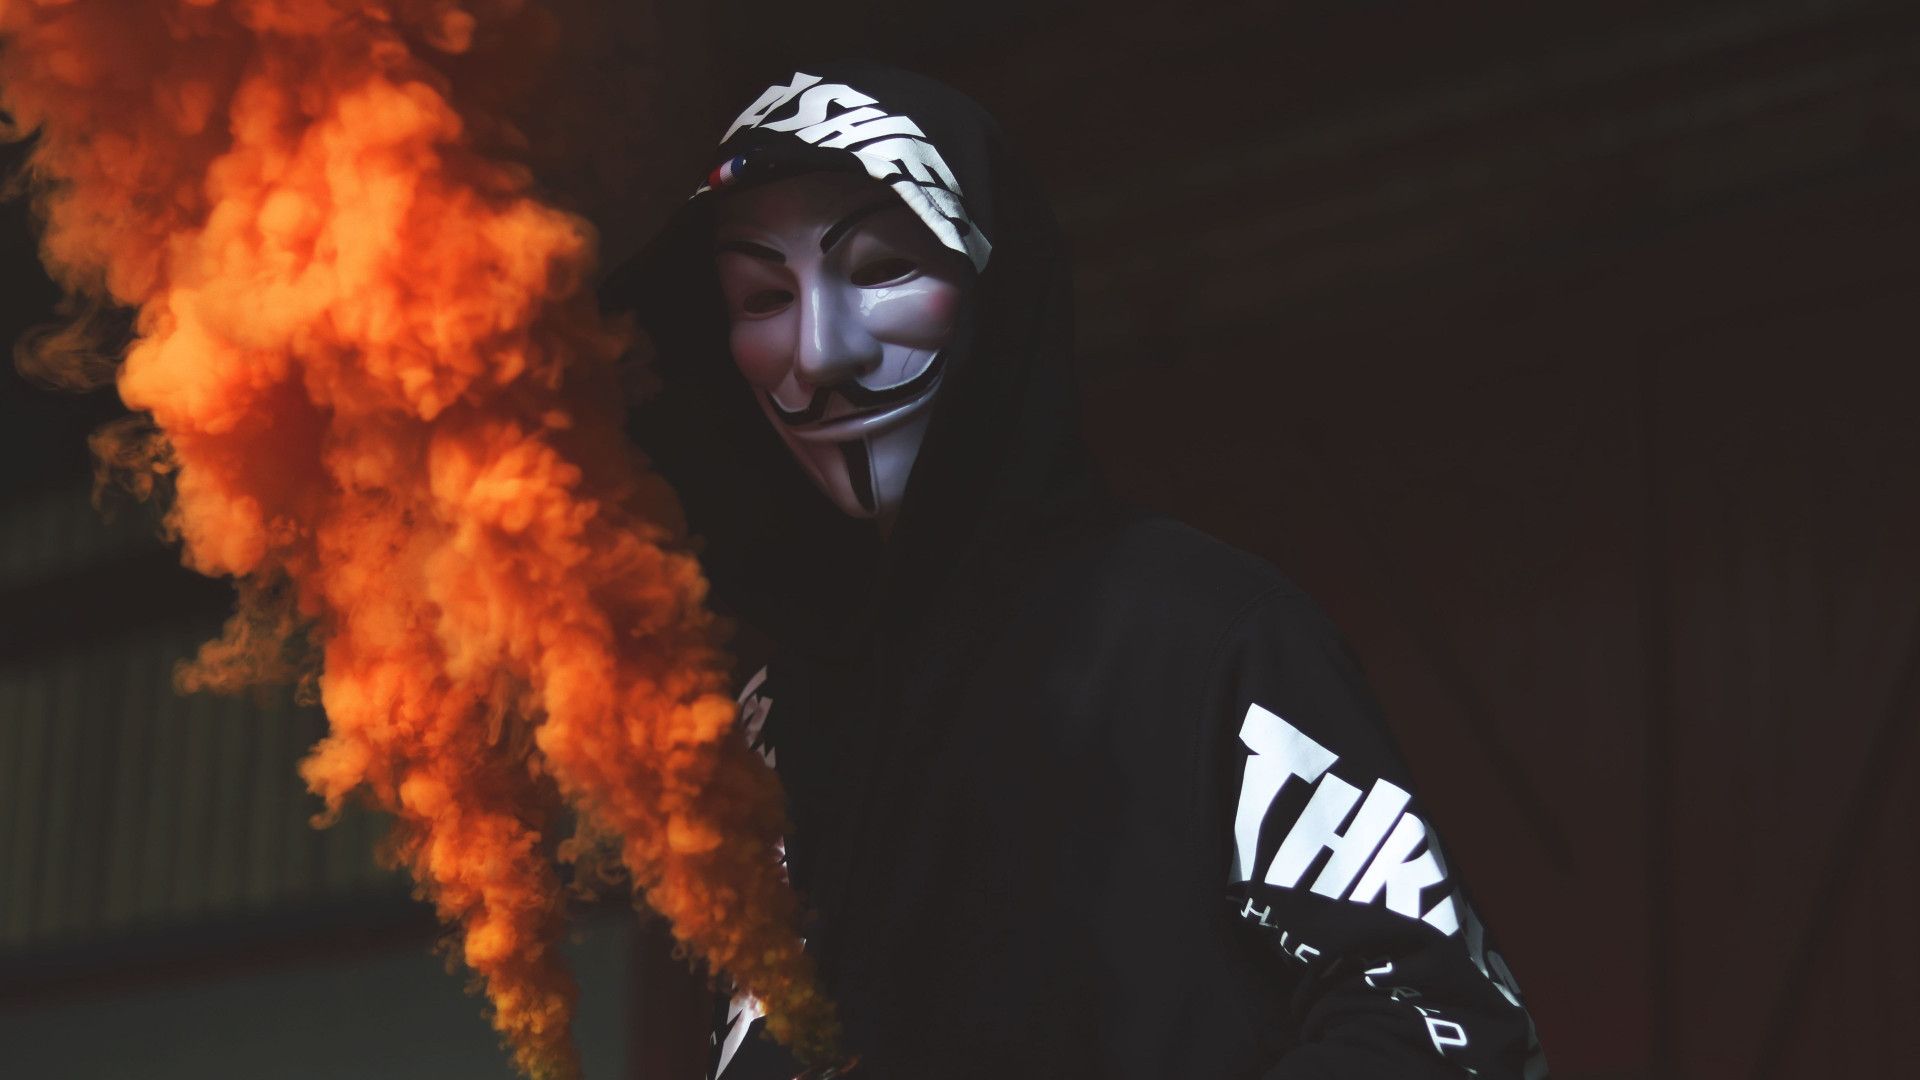 Download wallpaper: Anonymous mask and orange smoke 1920x1080